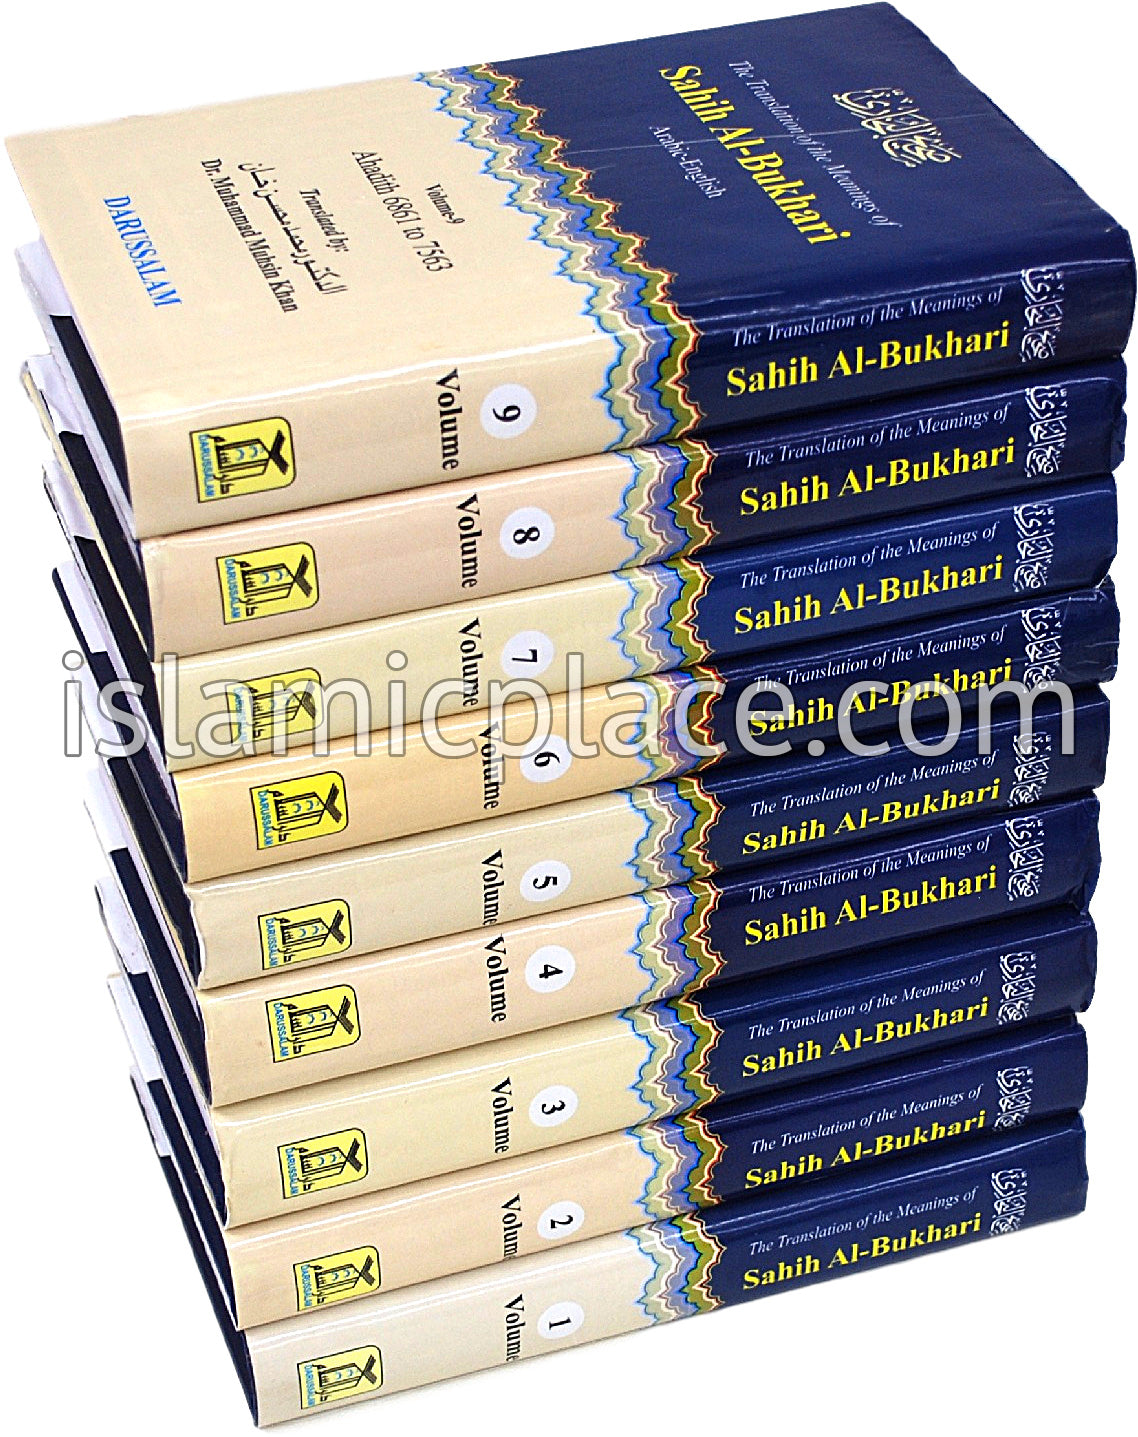 [9 vol set] Sahih Al-Bukhari (Arabic and English)